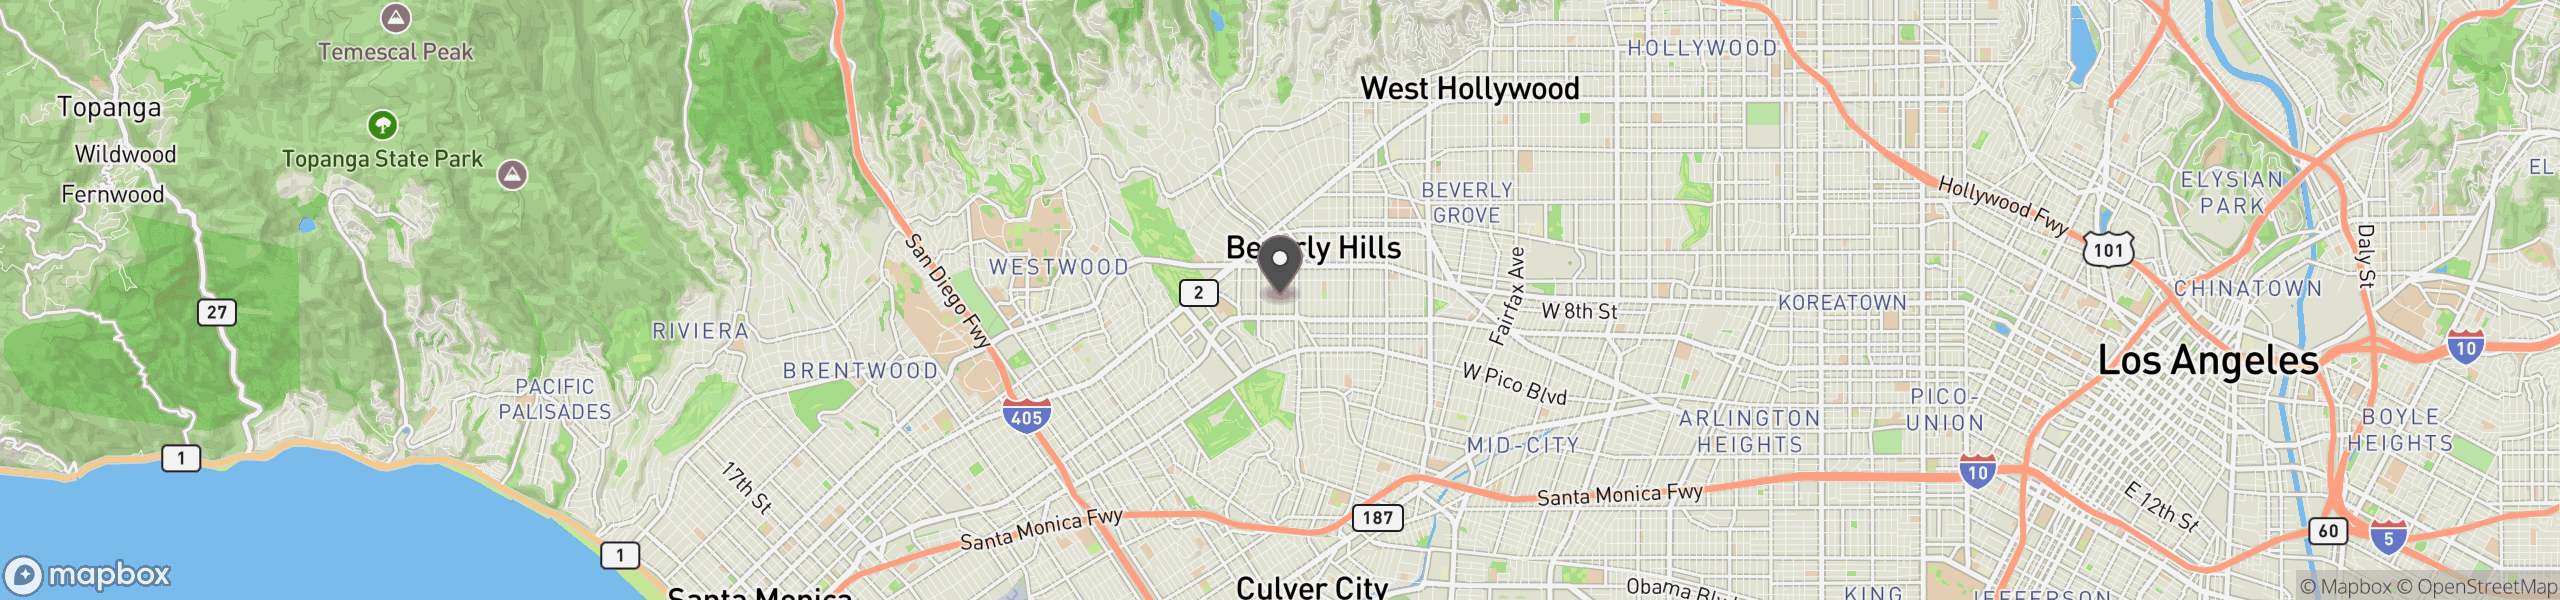 Beverly Hills, CA 90212